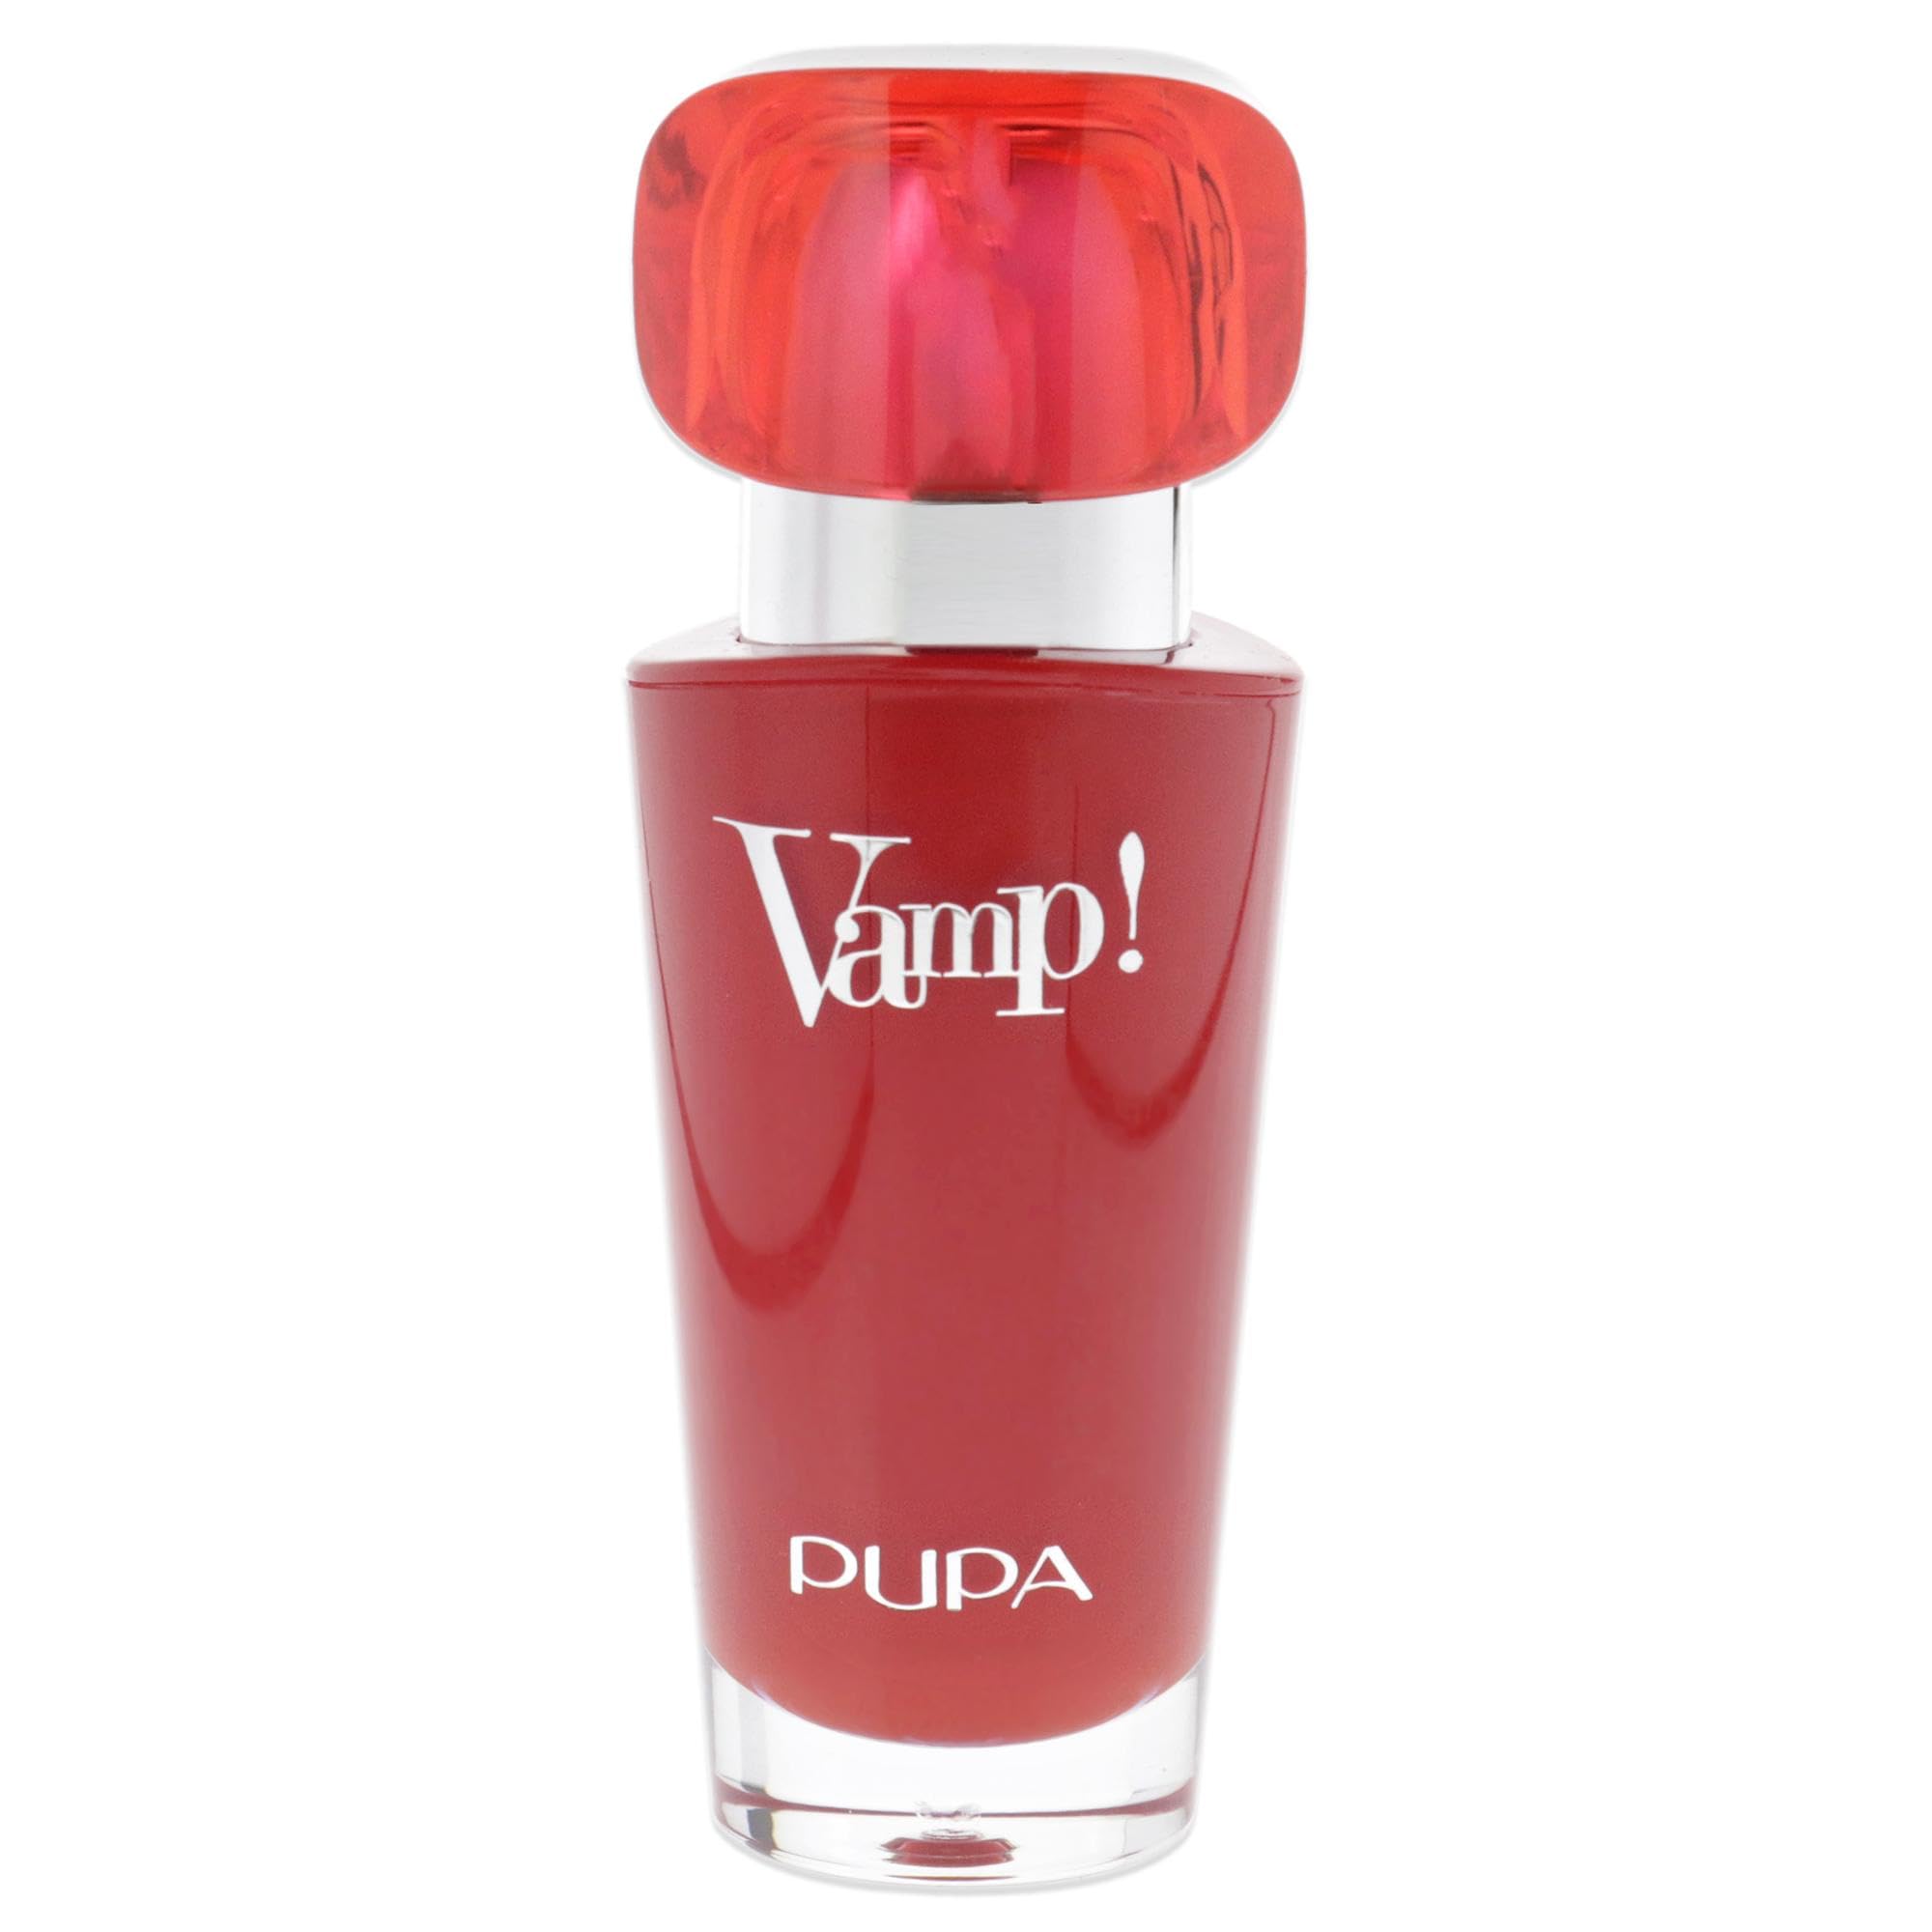 Pupa Milano Vamp! Extreme Color Lippenstift mit Plumping Treatment - 104 Ancient Rose für Frauen 3,5g Lippenstift